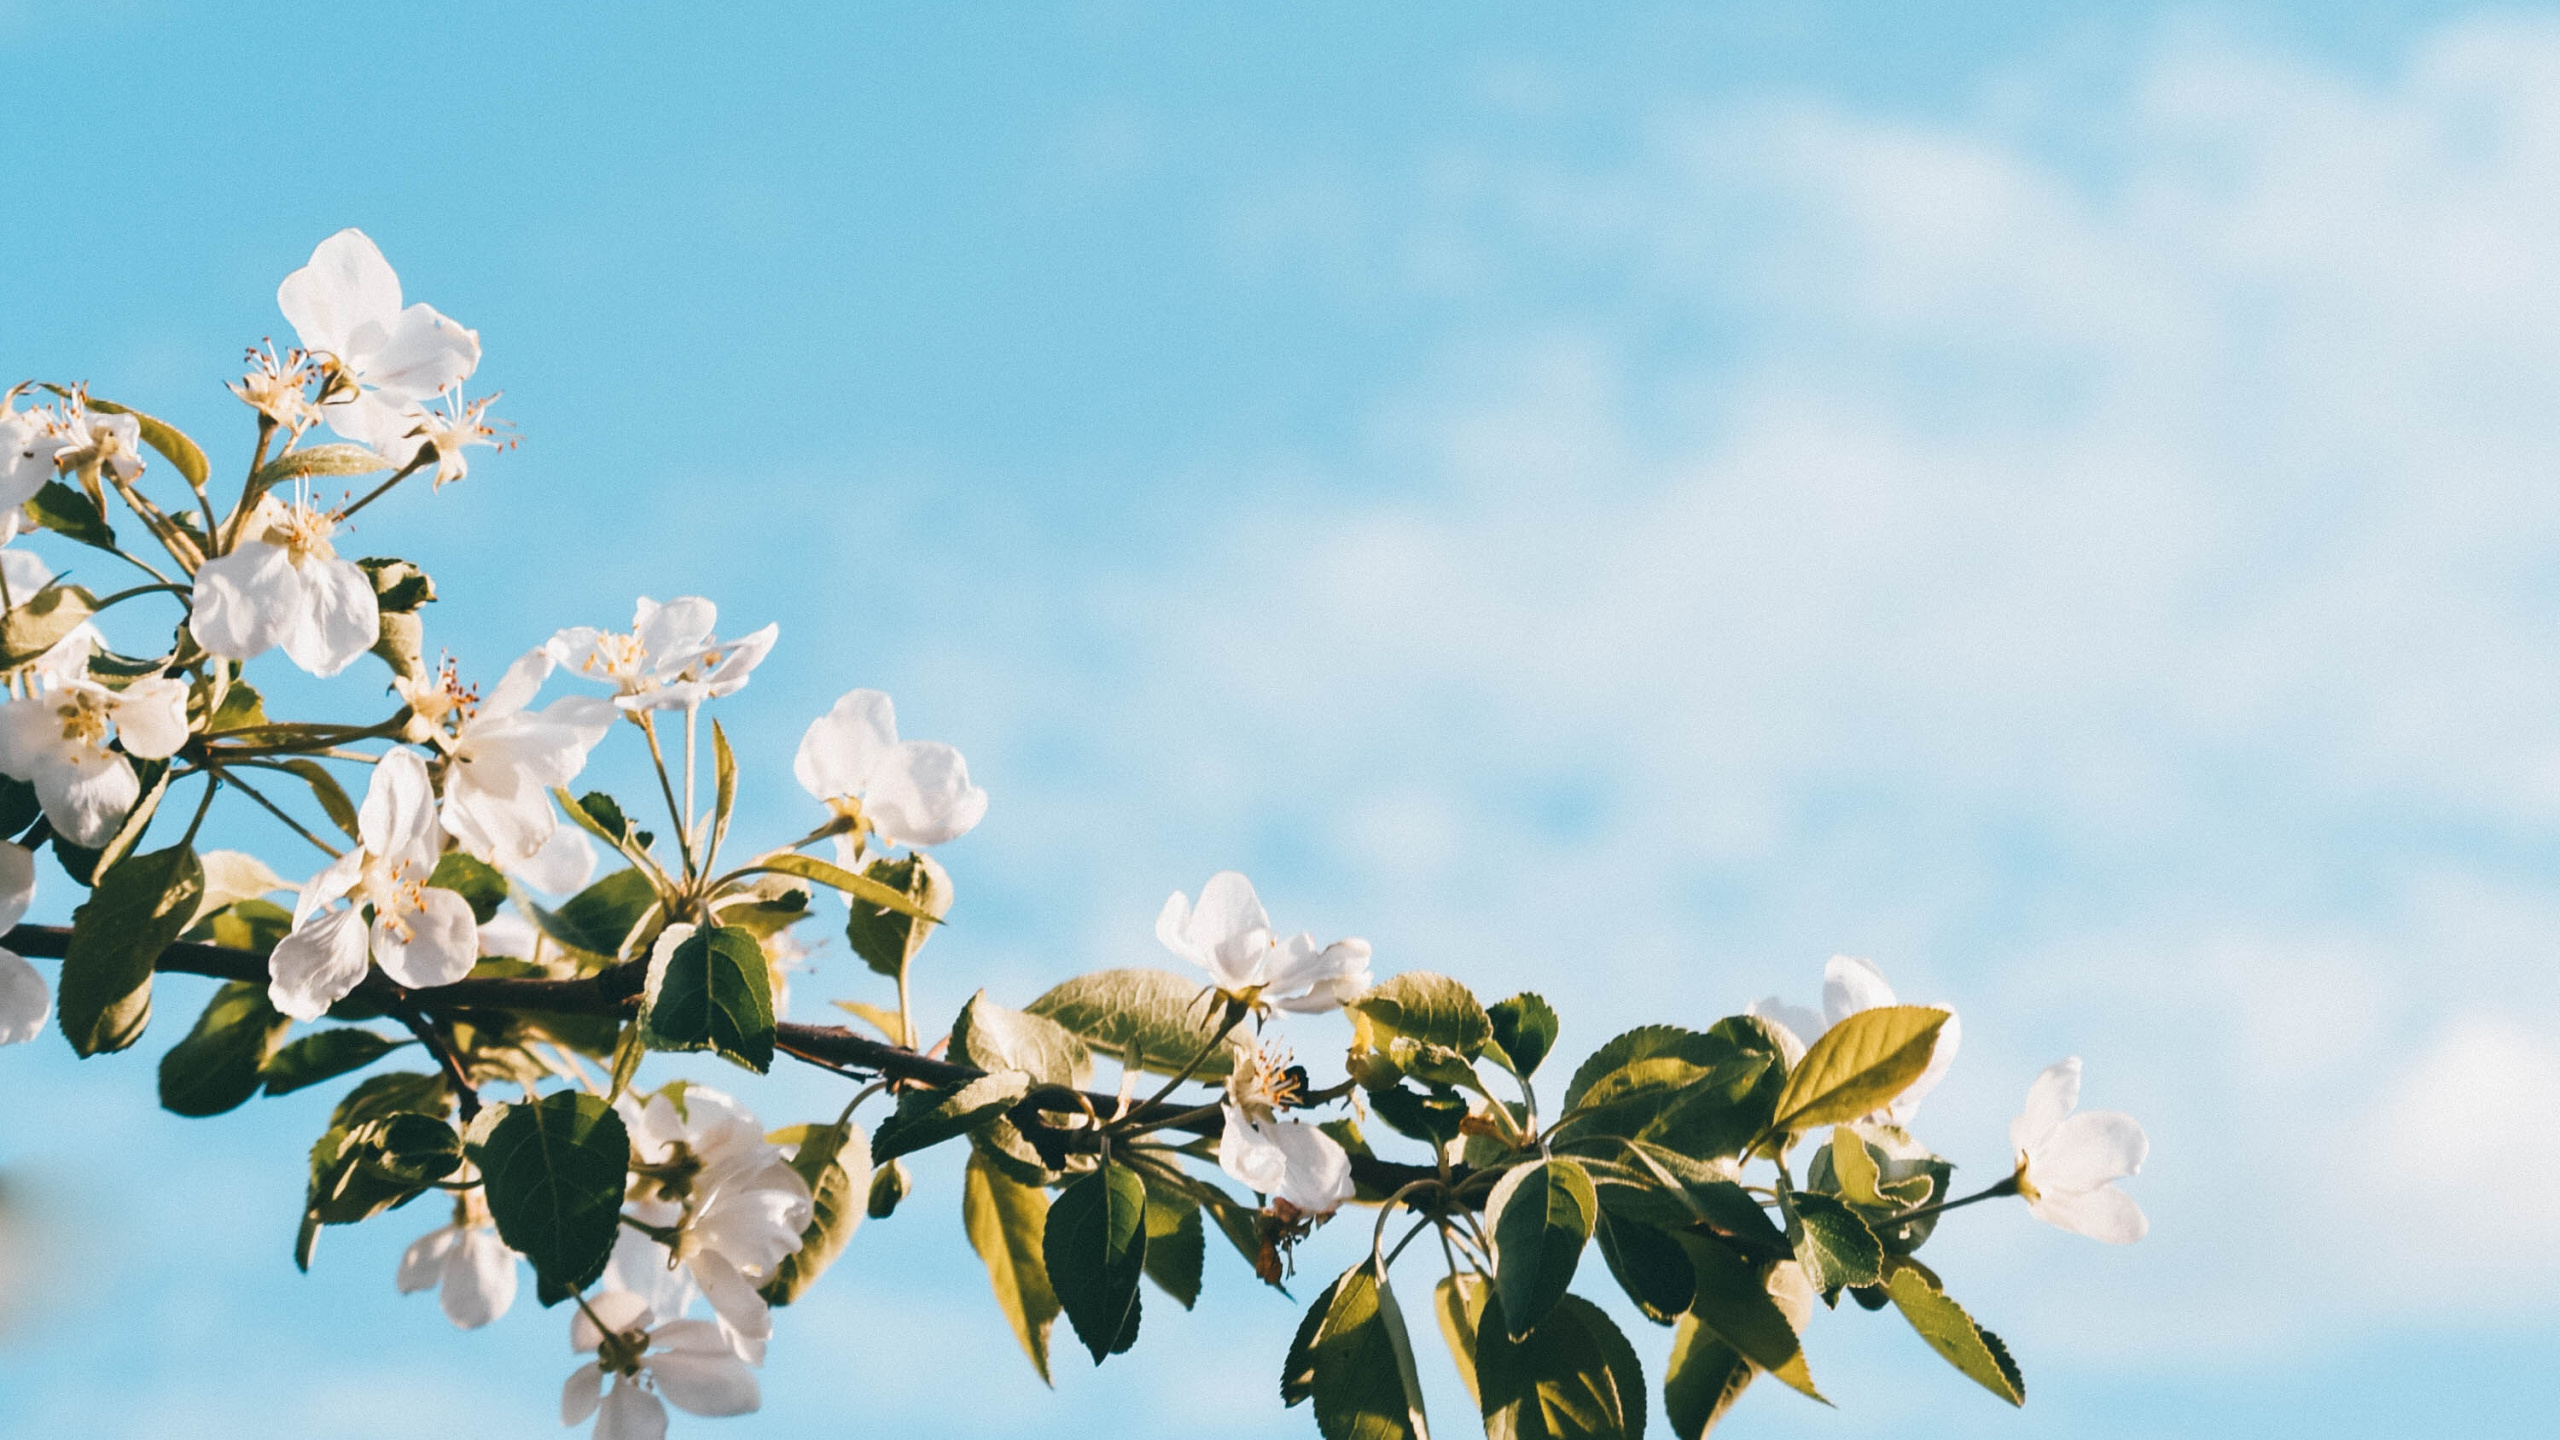 White Cherry Blossom Under Blue Sky During Daytime. Wallpaper in 2560x1440 Resolution